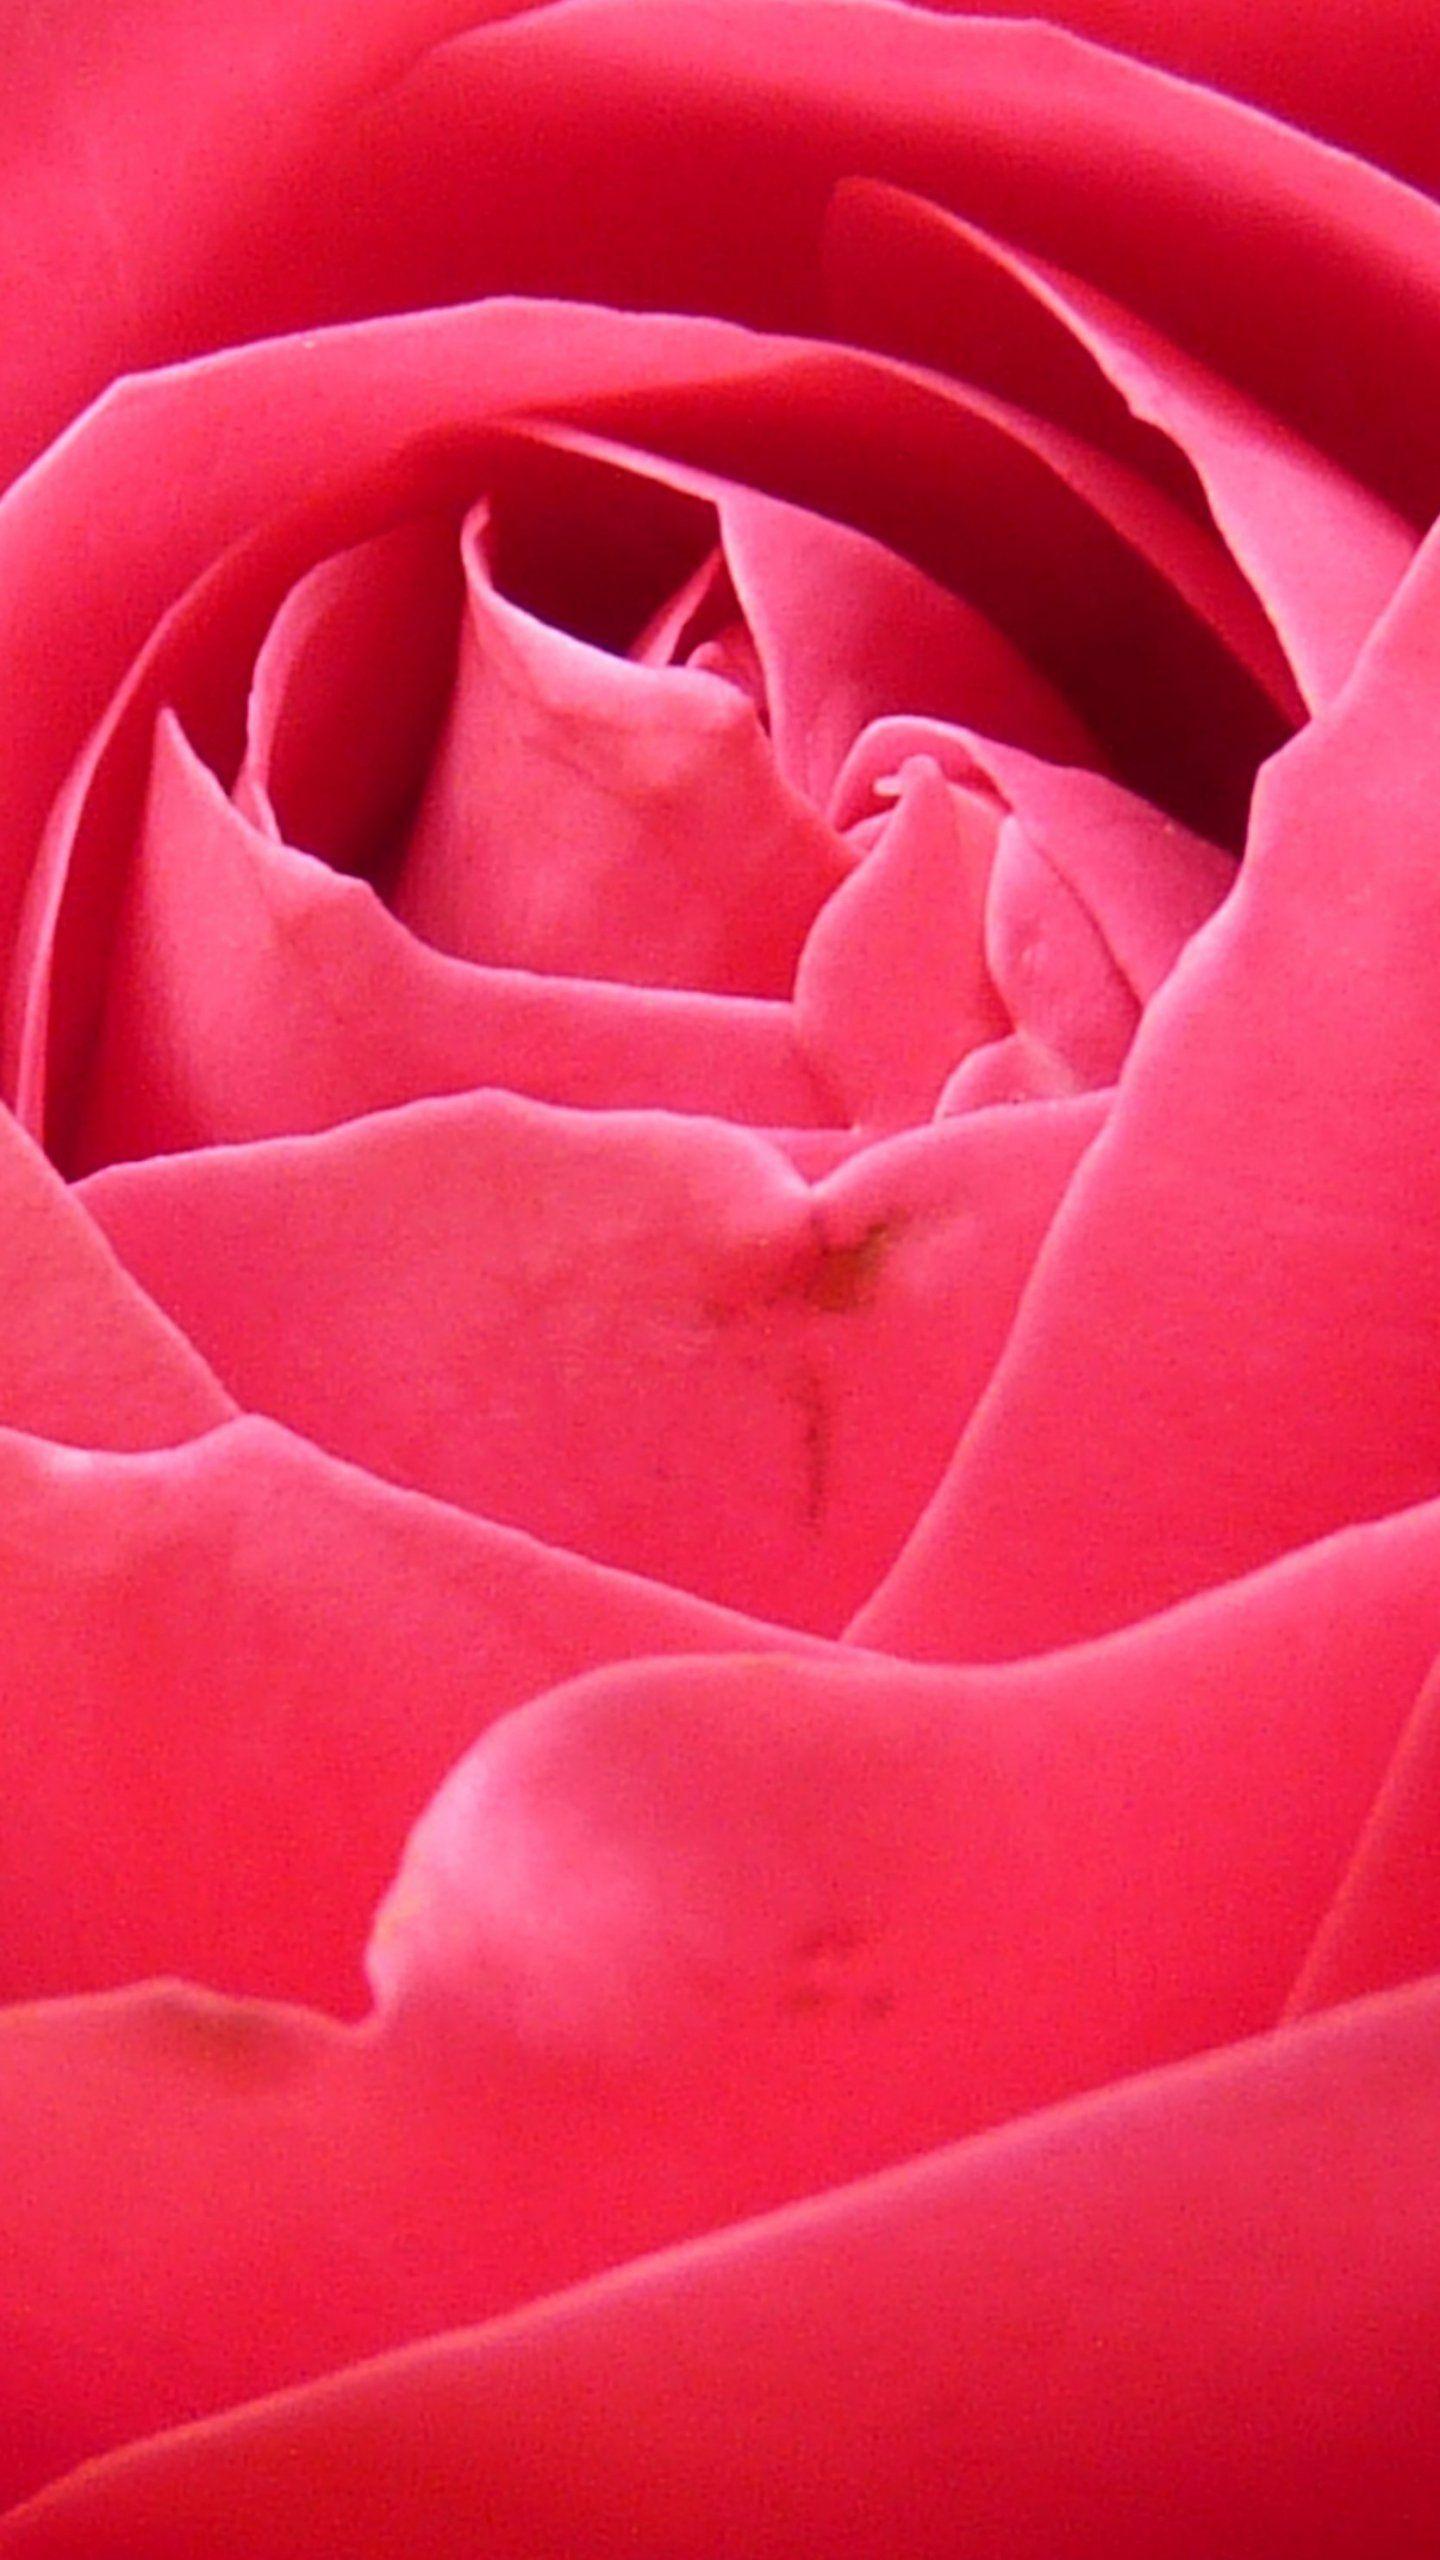 Bright Pink Rose Closeup Wallpaper, Android & Desktop Background. Flower phone wallpaper, Beautiful flowers wallpaper, Beautiful flowers picture